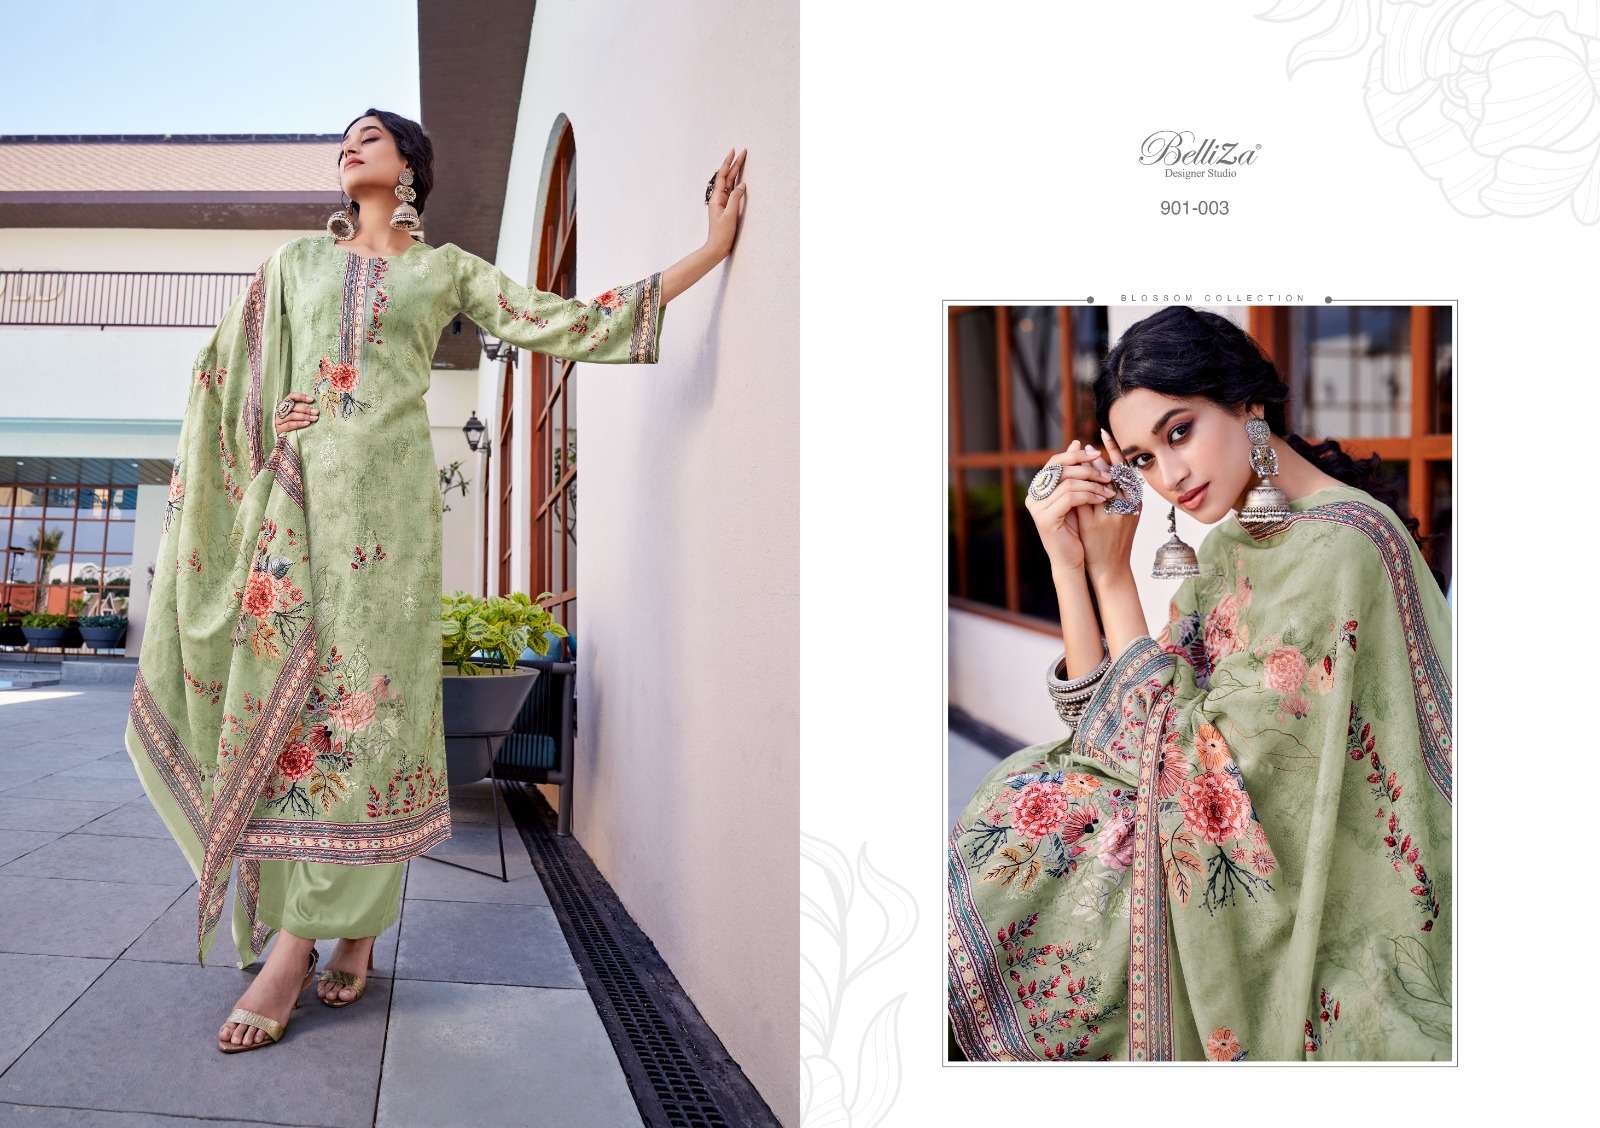 belliza designer studio naazia  pure jam cotton innovative look salwar suit catalog